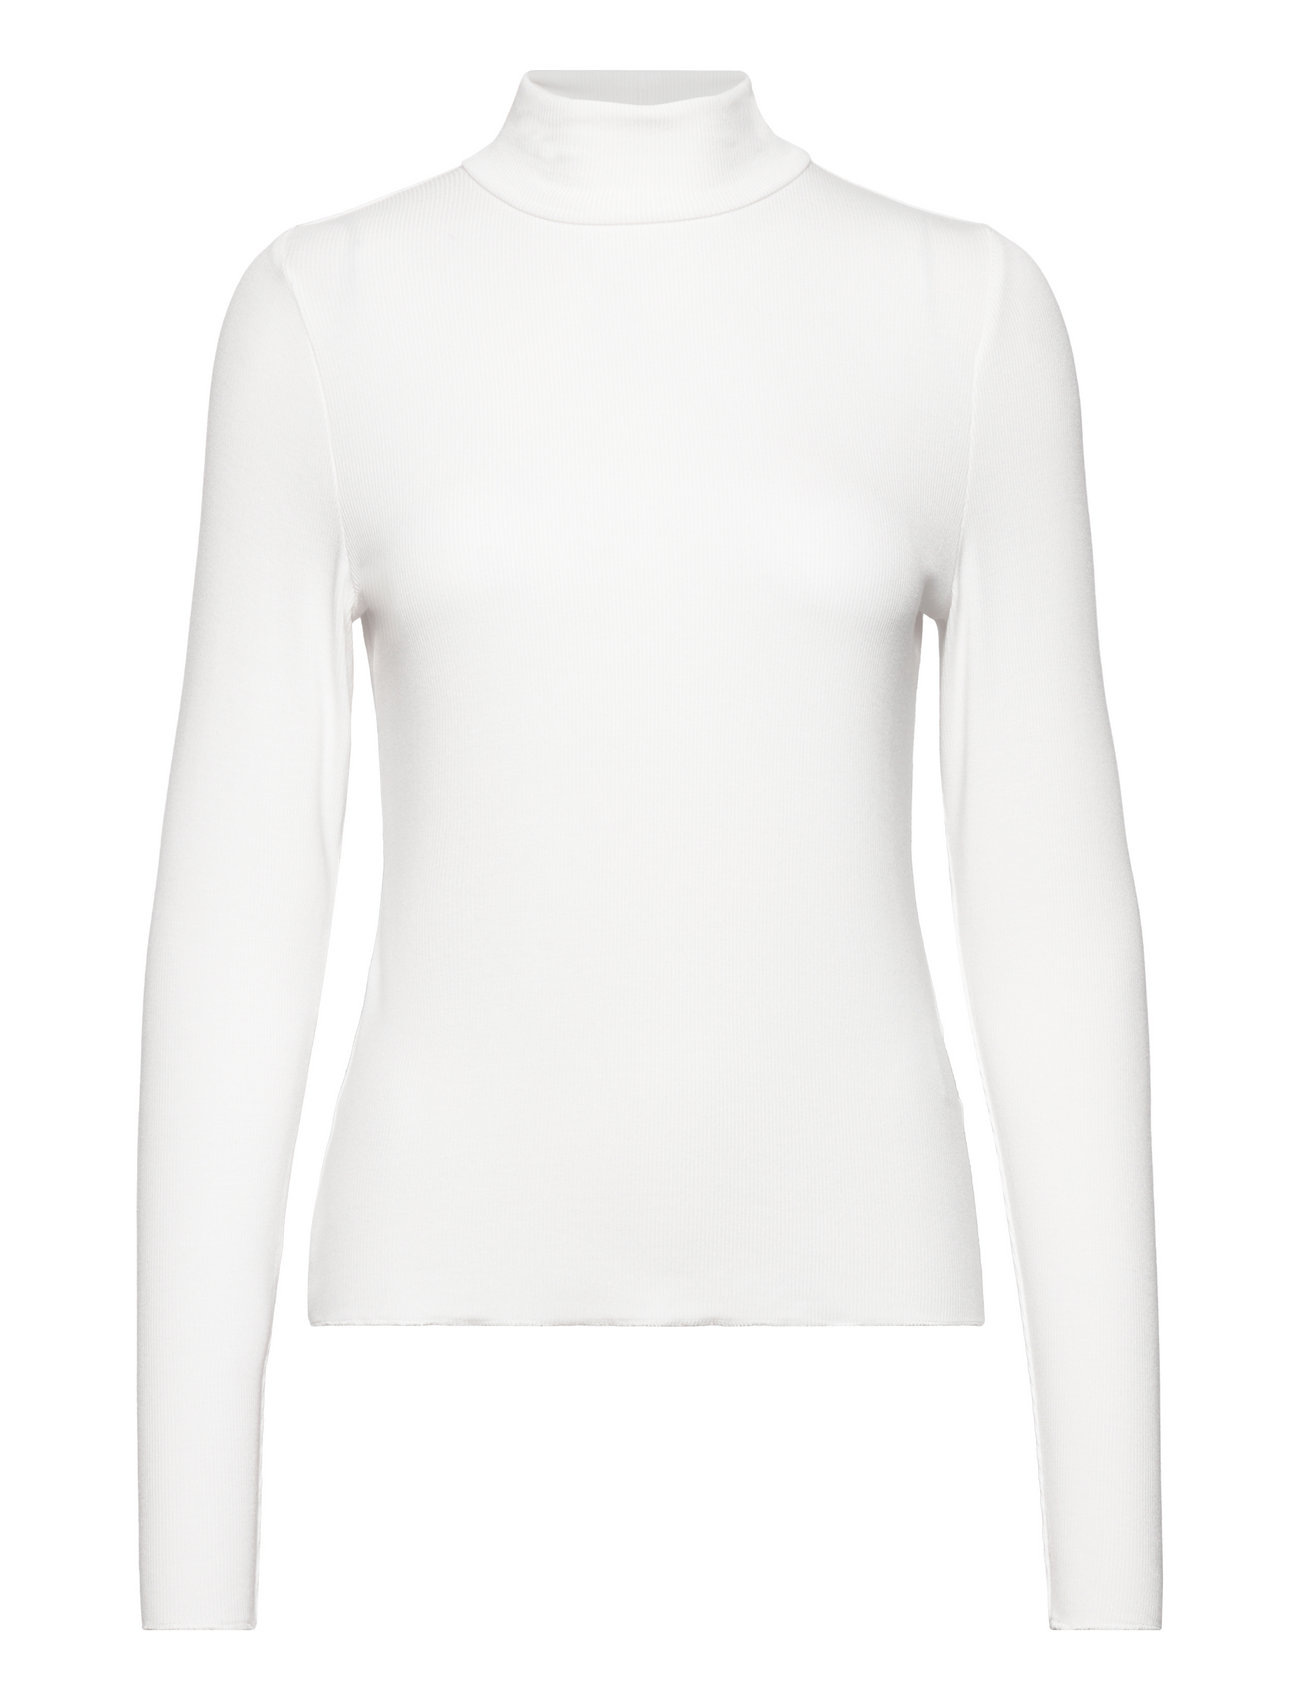 Lr-Ika Tops T-shirts & Tops Long-sleeved White Levete Room